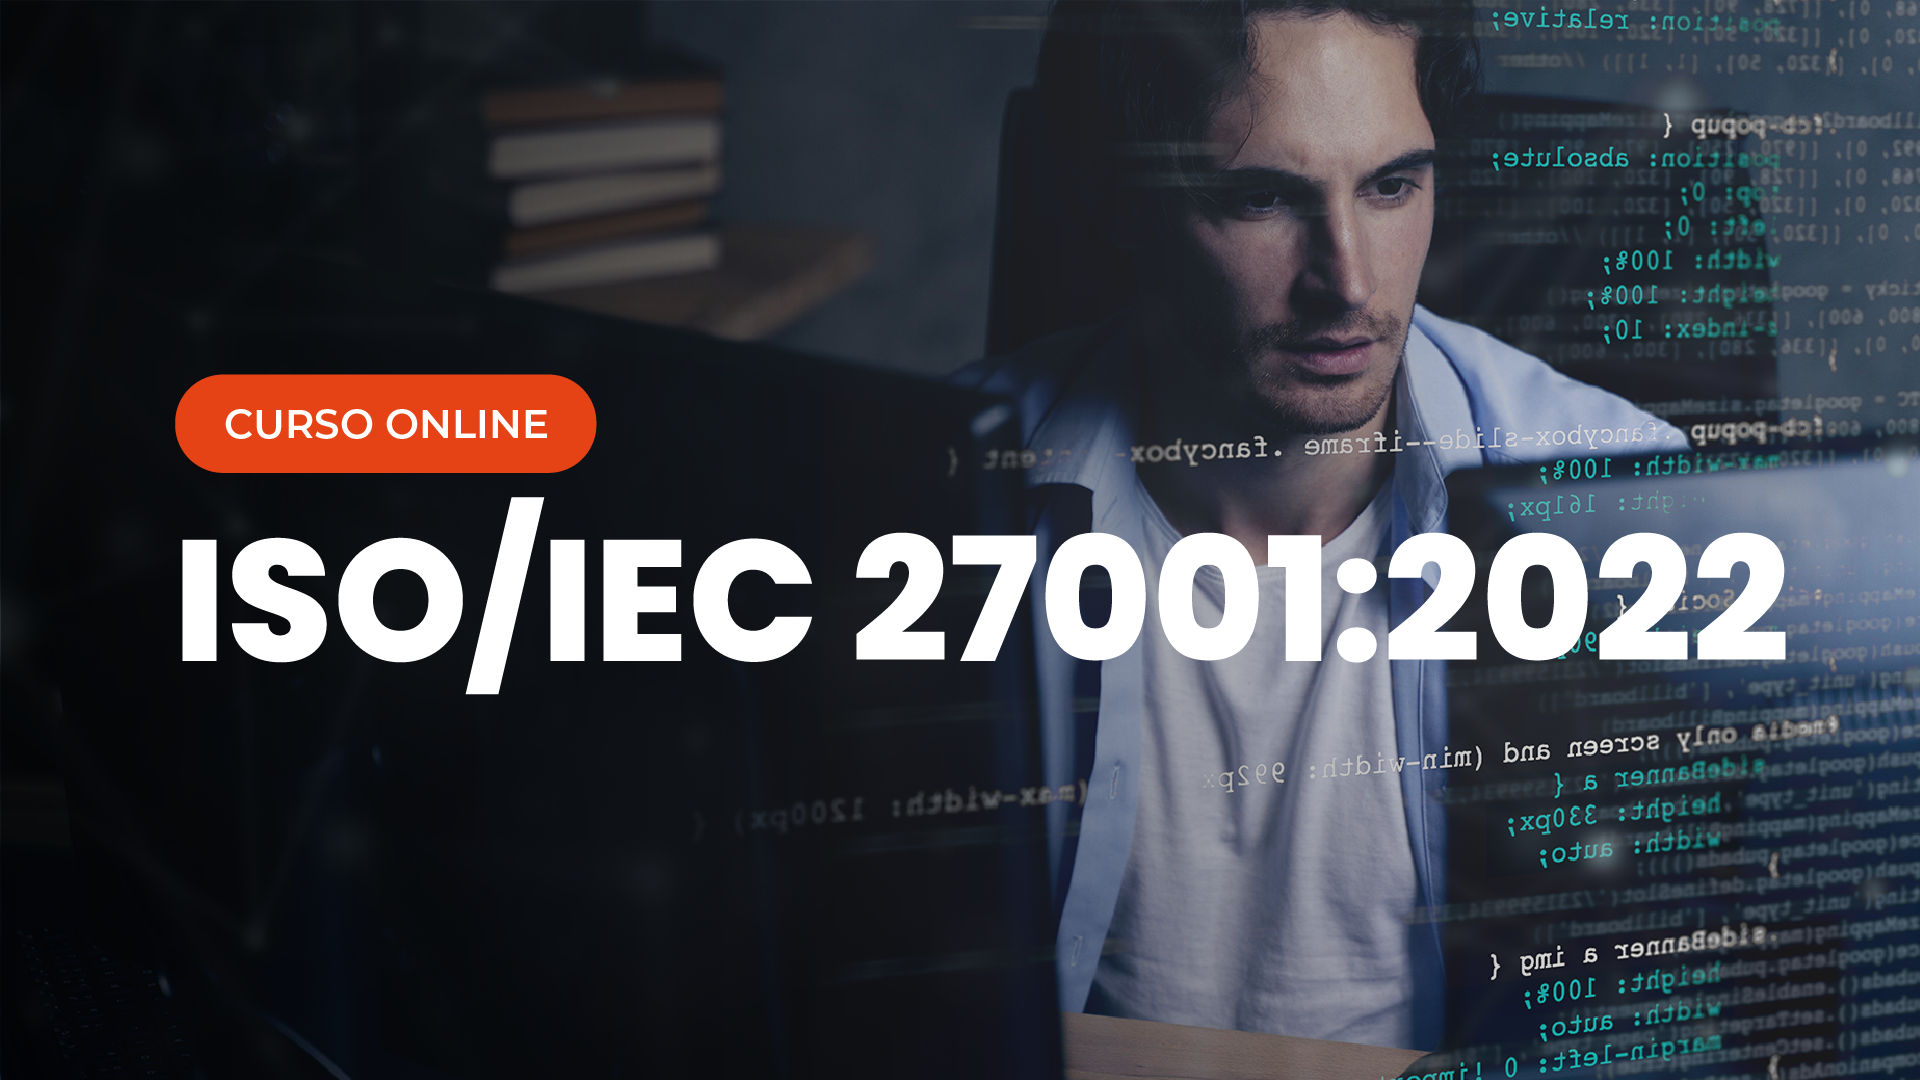 Curso Online ISO/IEC 27001:2022